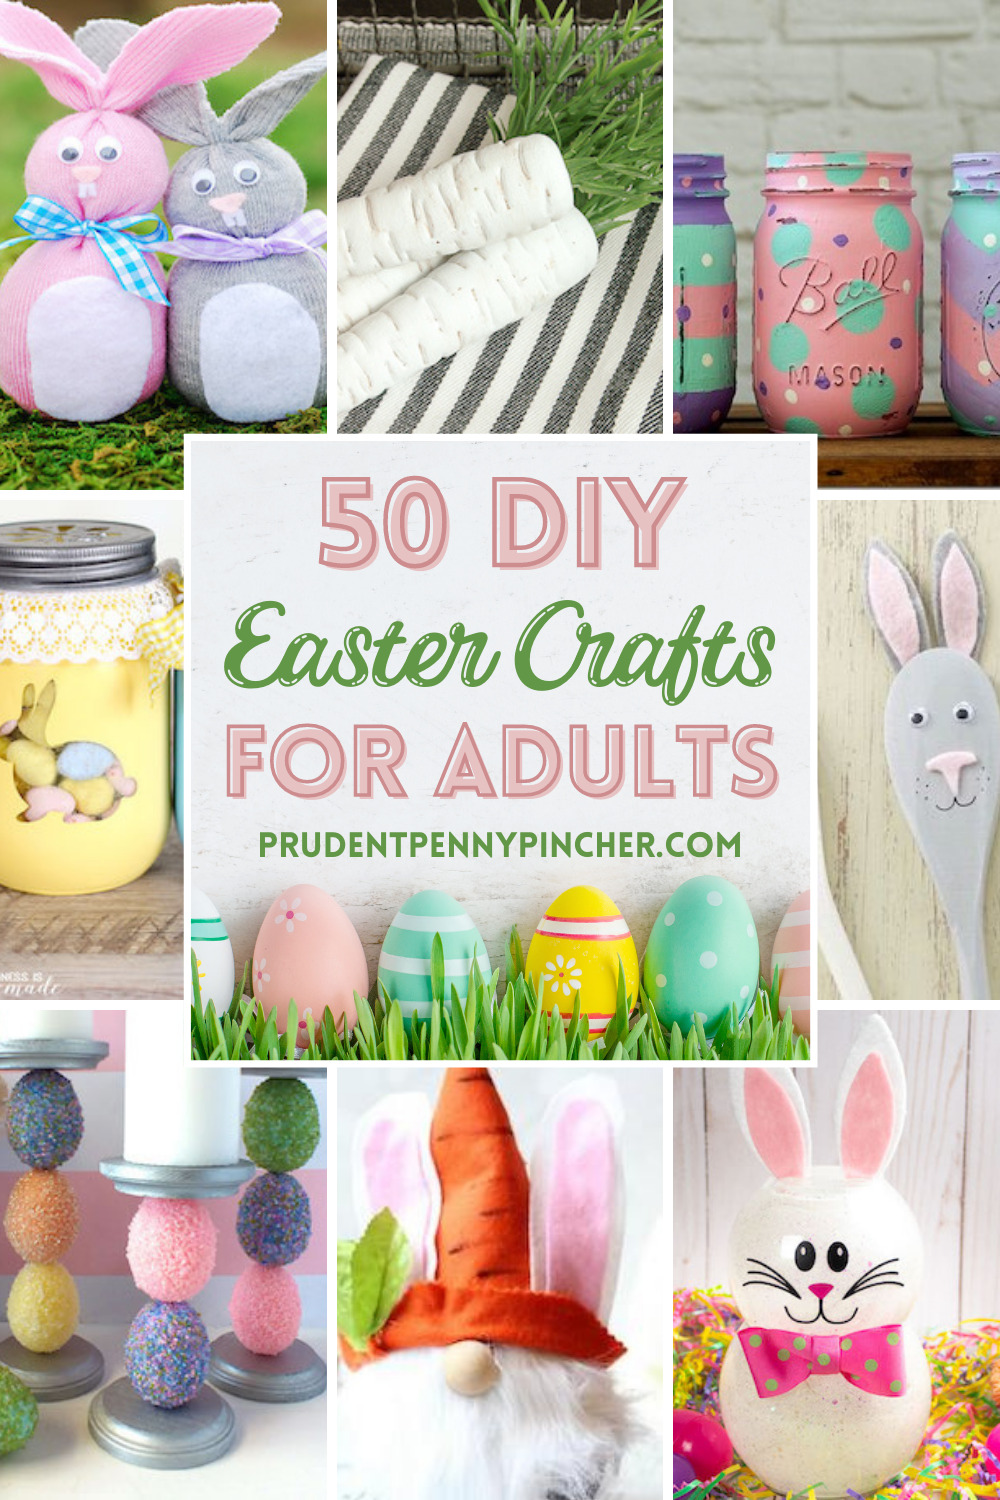 Easter bunny mason jars are a cute, DIY Easter decor idea.